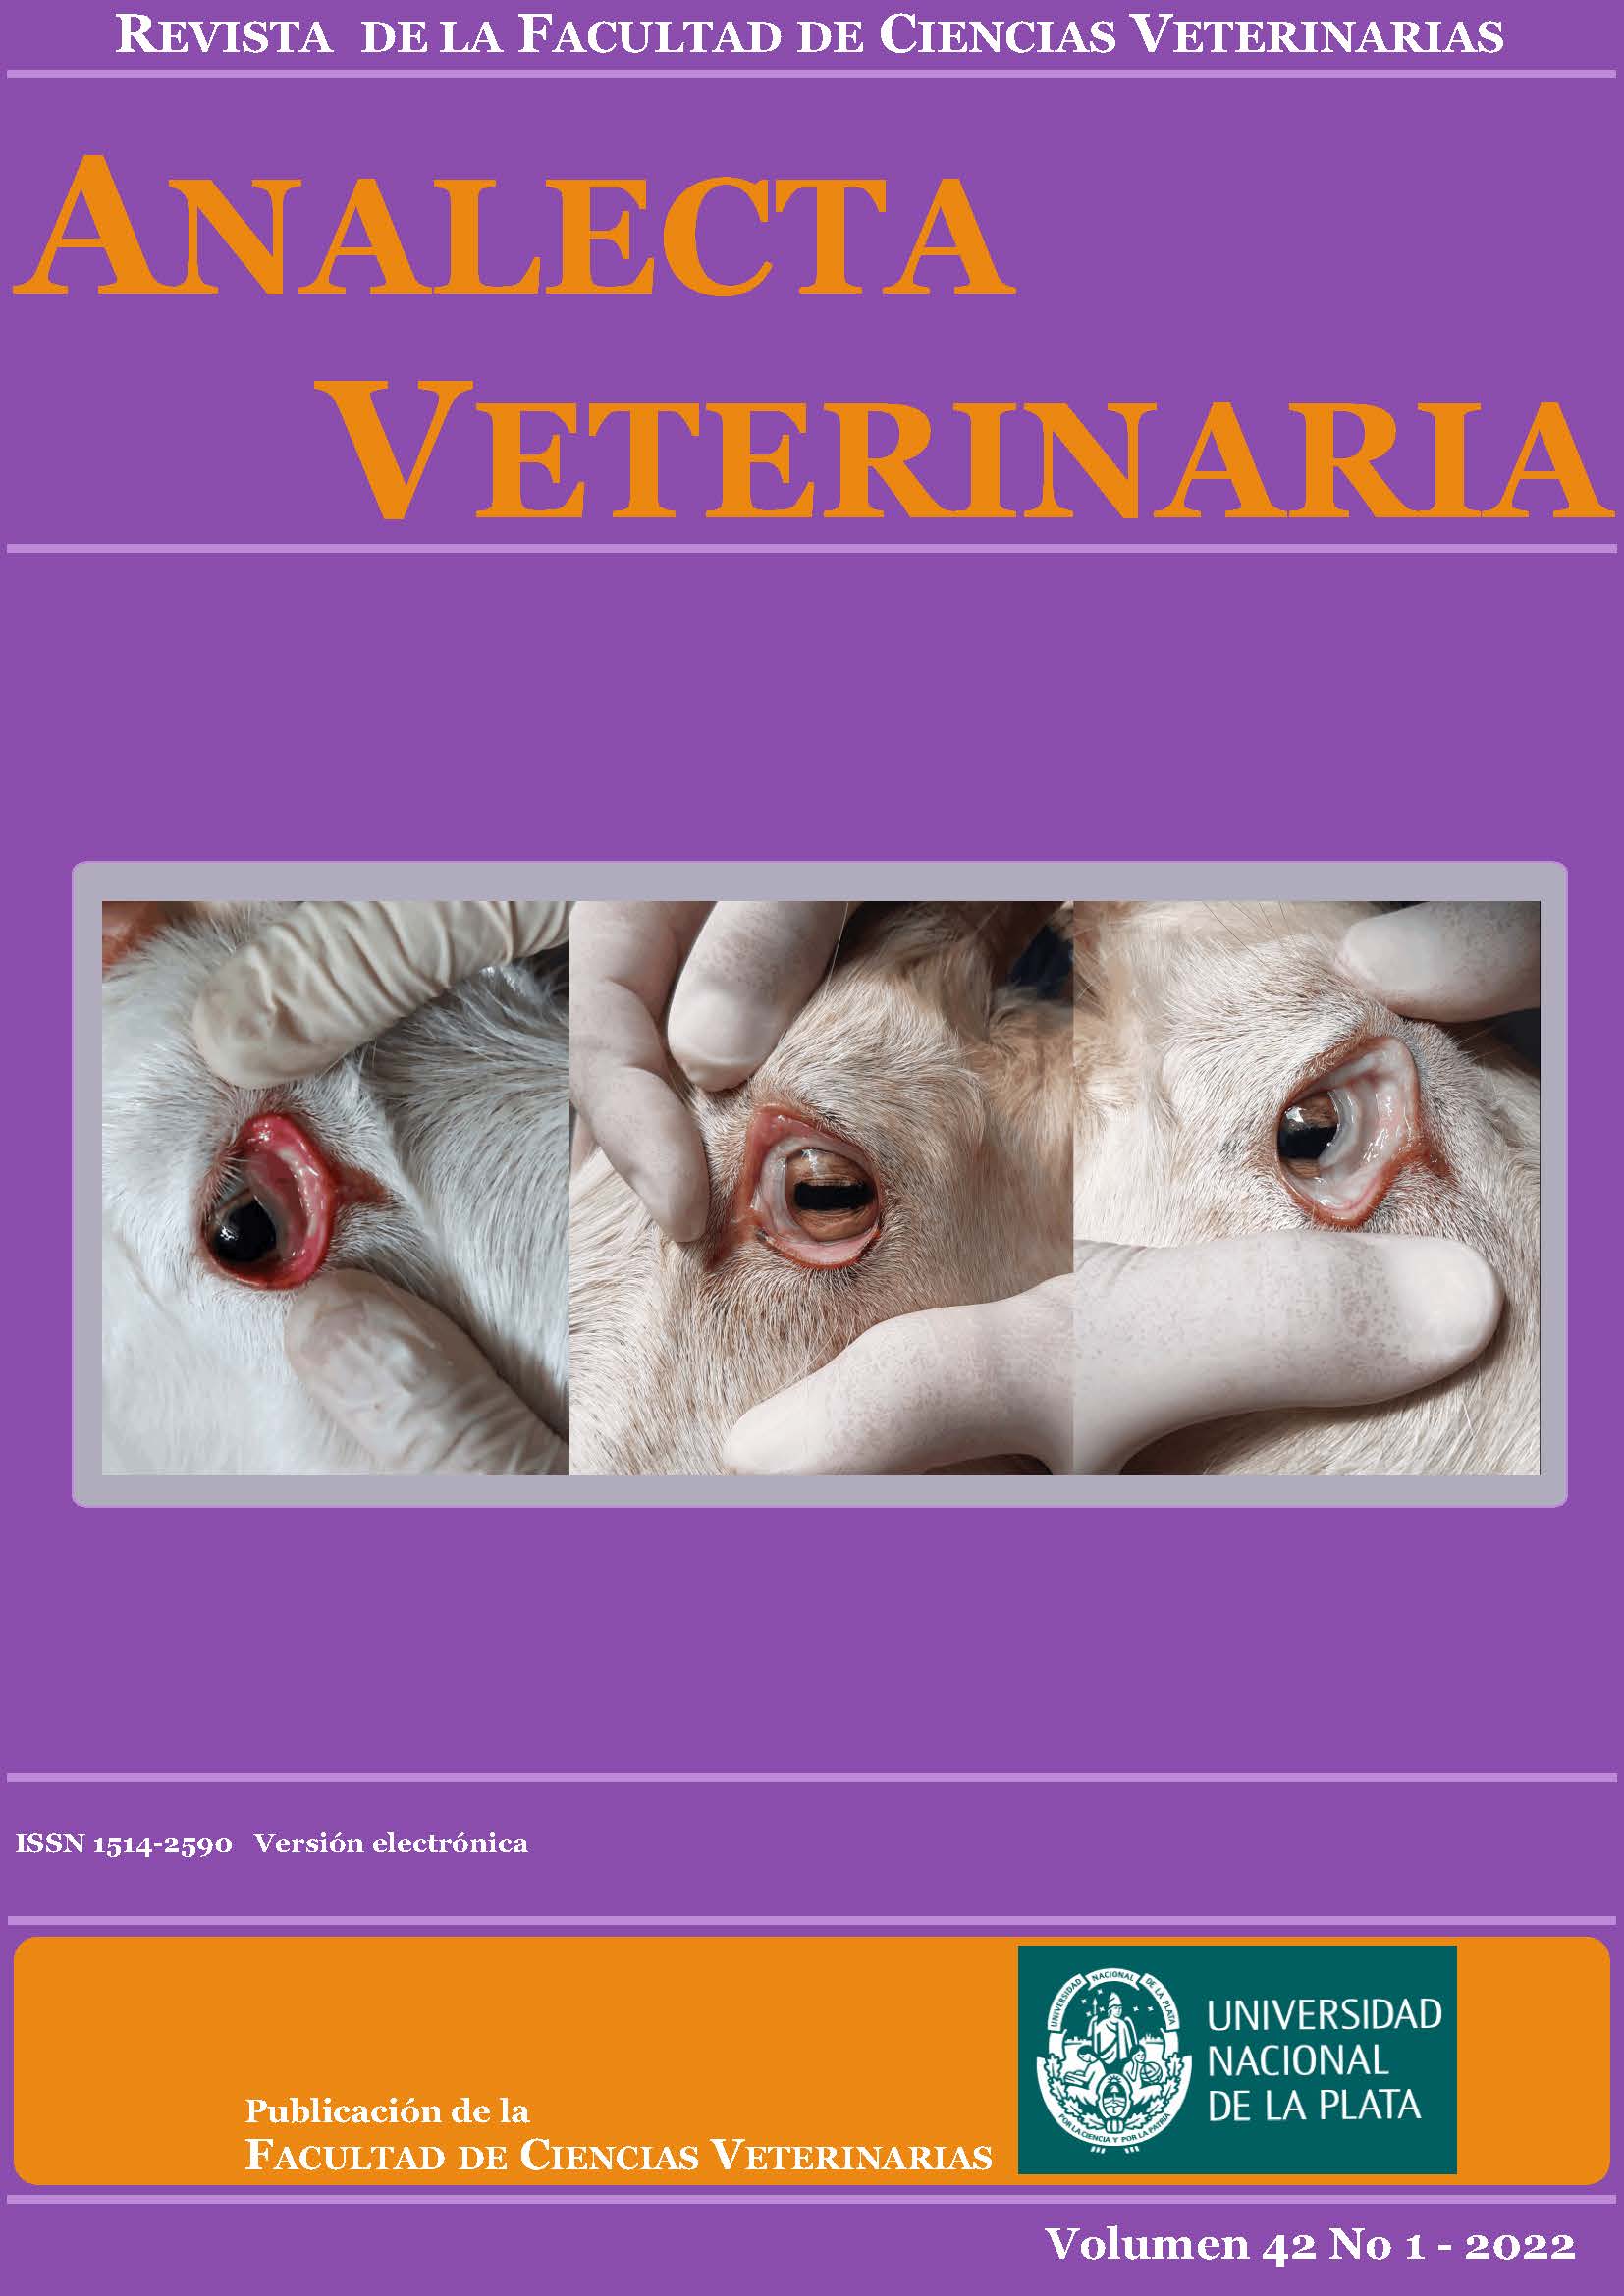 					Ver Vol. 42 Núm. 1 (2022): Analecta Veterinaria
				